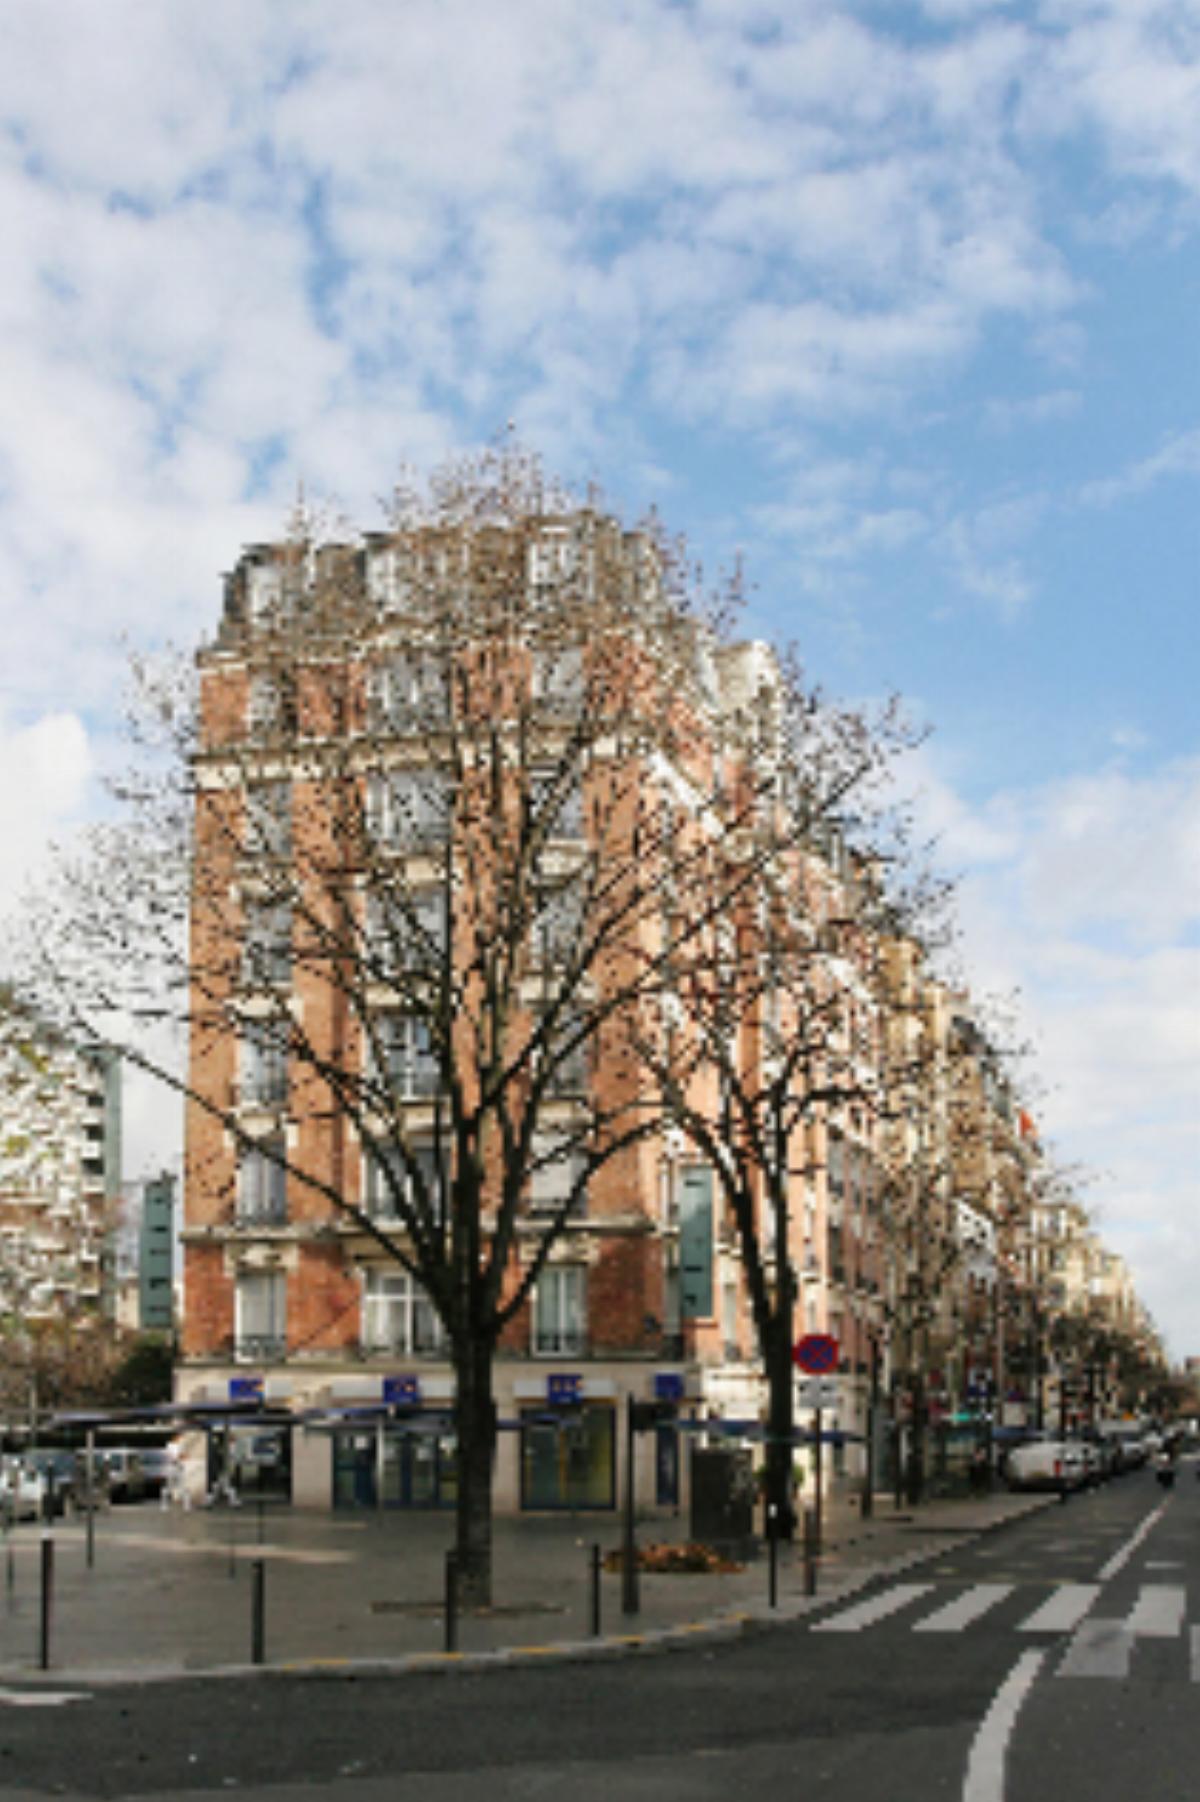 Chouette Hotel Hotel Paris France